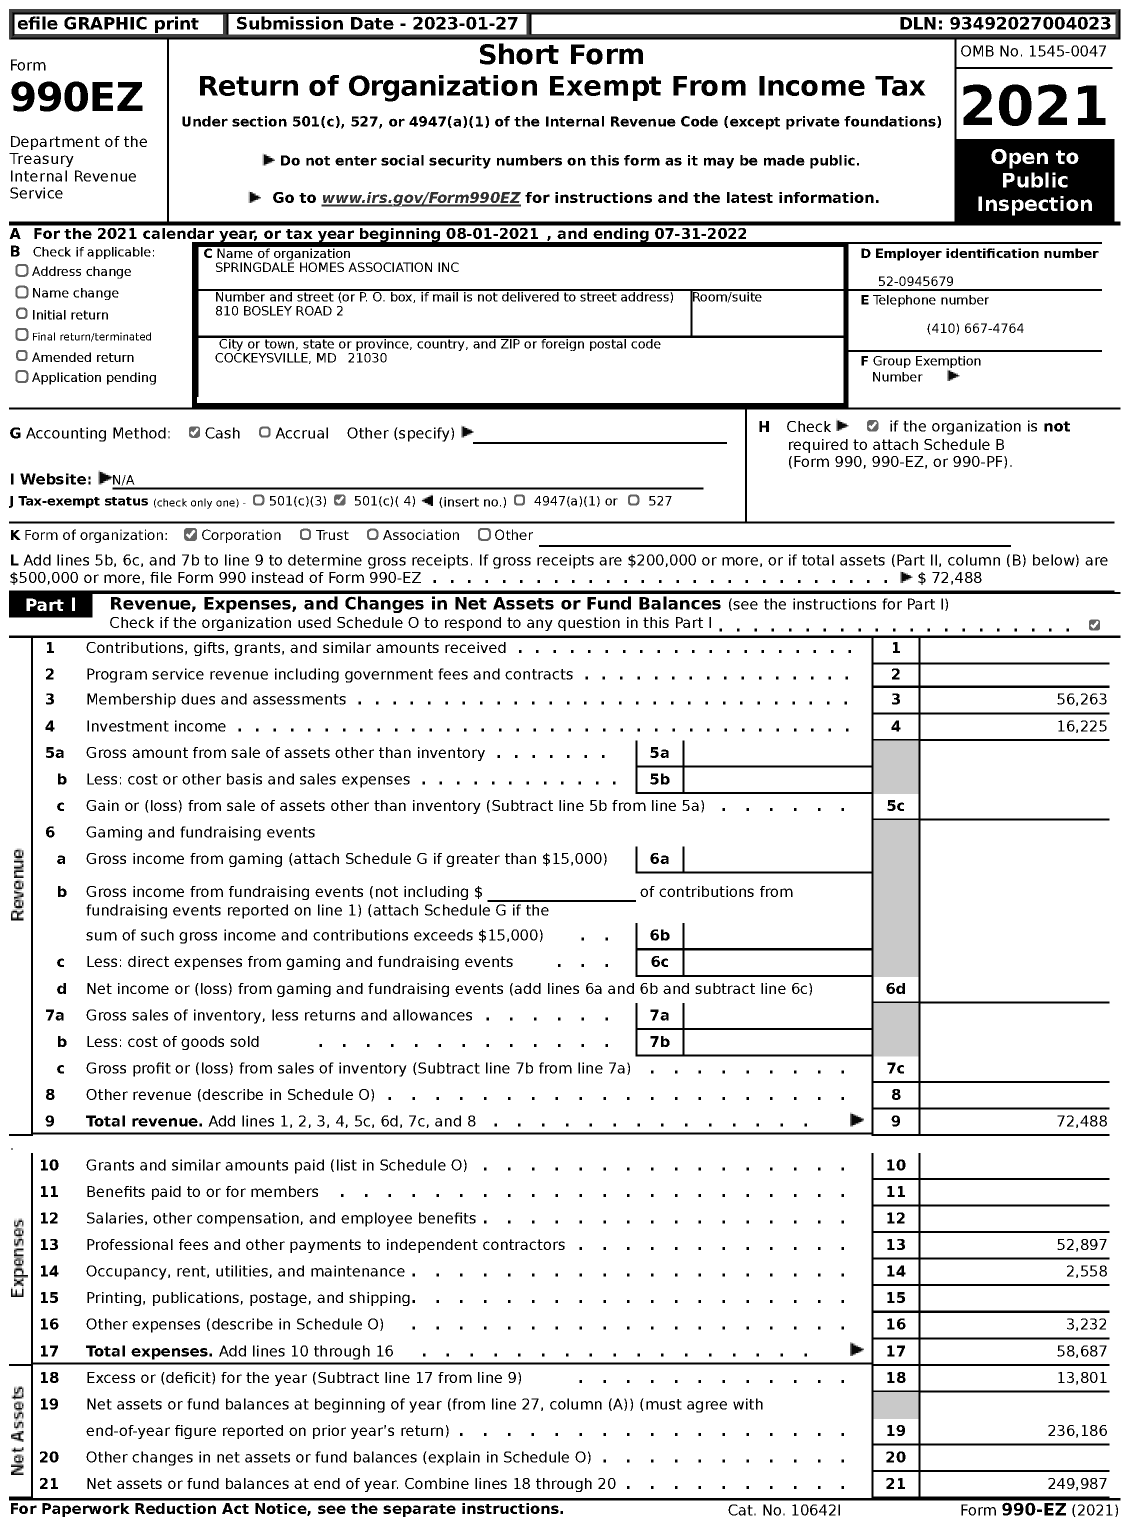 Image of first page of 2021 Form 990EZ for Springdale Homes Association